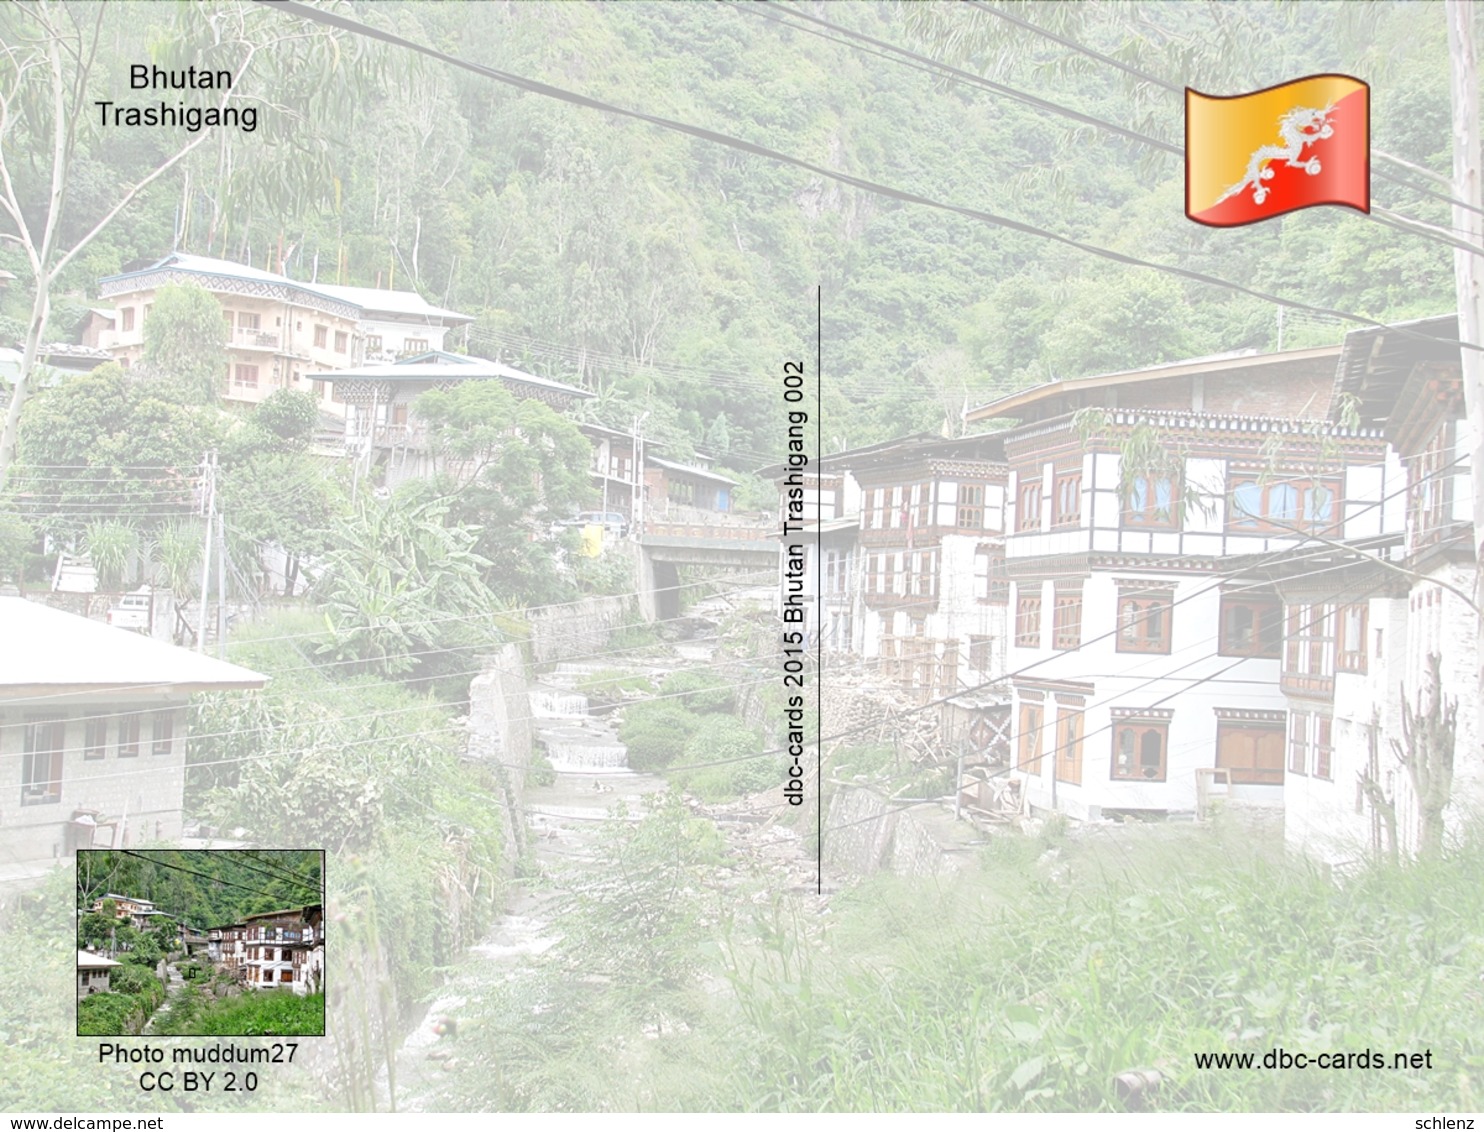 Trashigang Bhutan - Bhutan